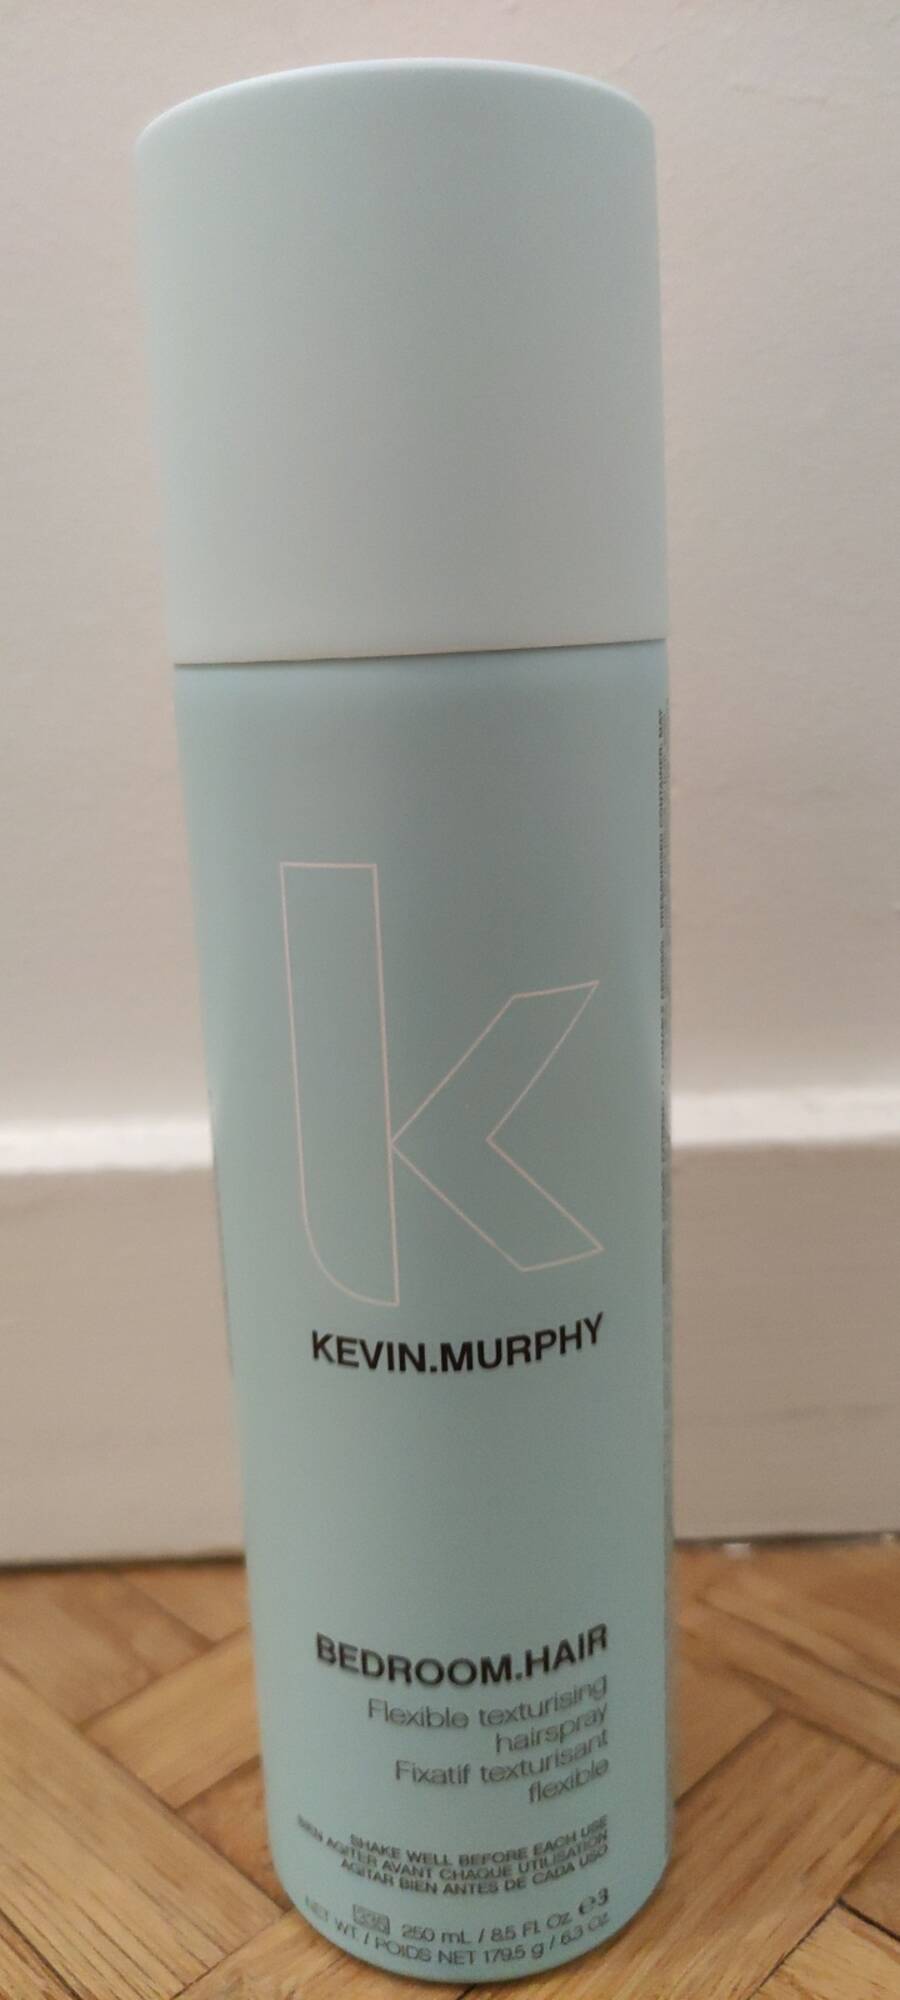 KEVIN MUTPHY - Bedroom hair - Fixatif texturisant flexible